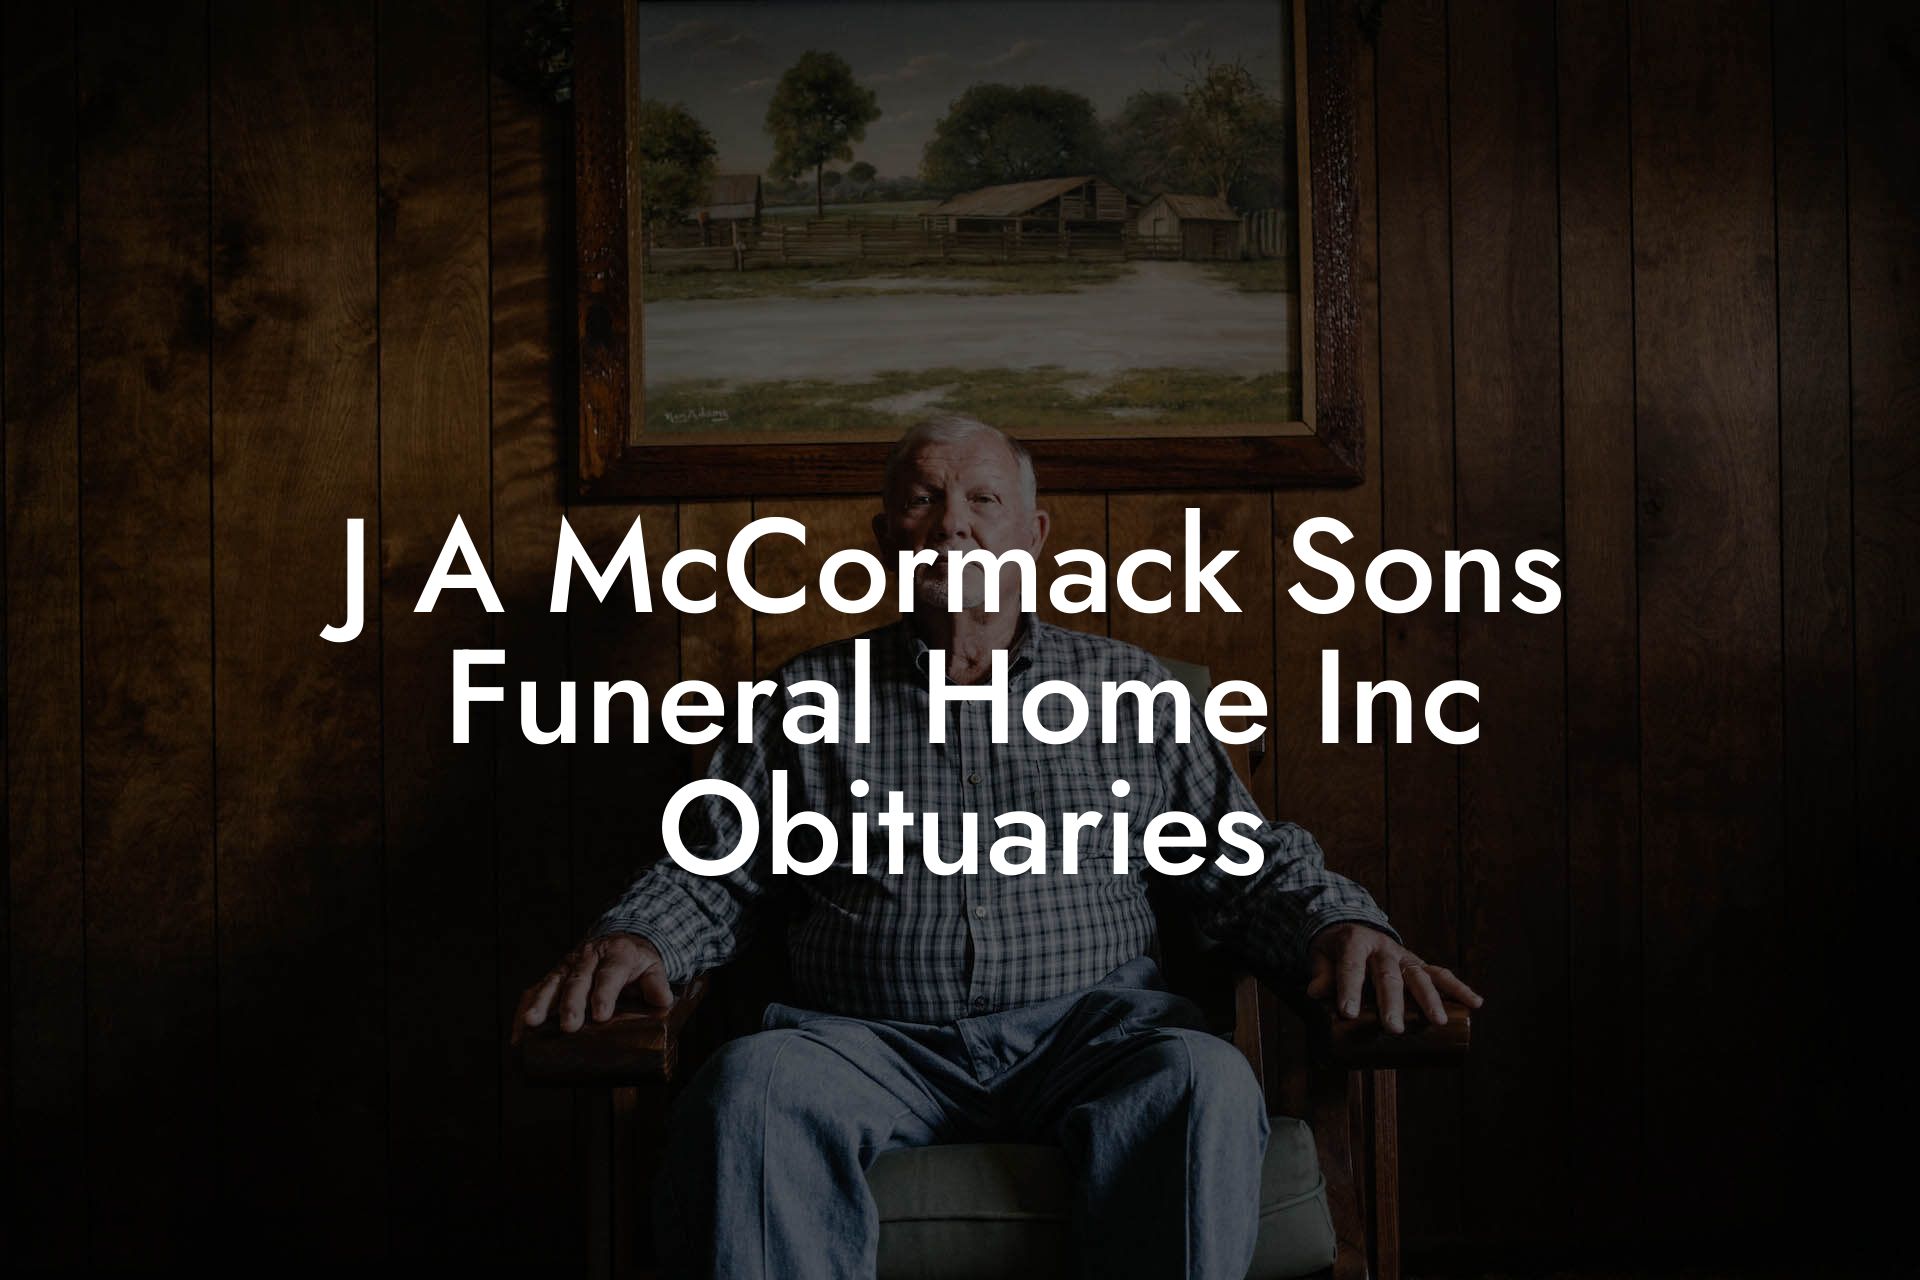 J A McCormack Sons Funeral Home Inc Obituaries